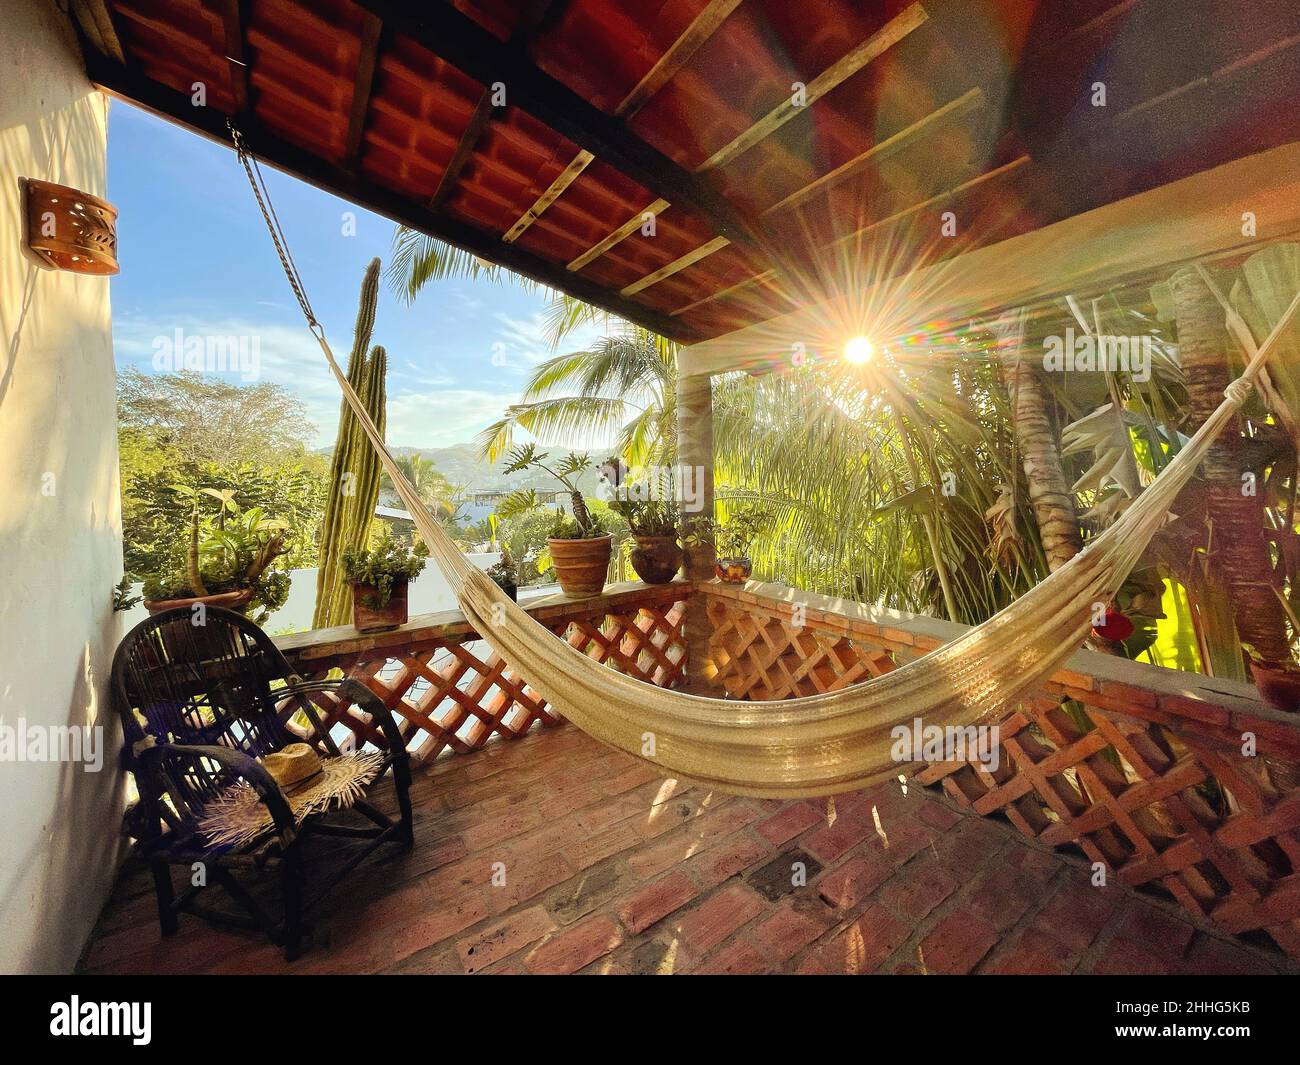 A hammock on a traditional Mexican casita veranda in Sayulita, Mexico. Stock Photo